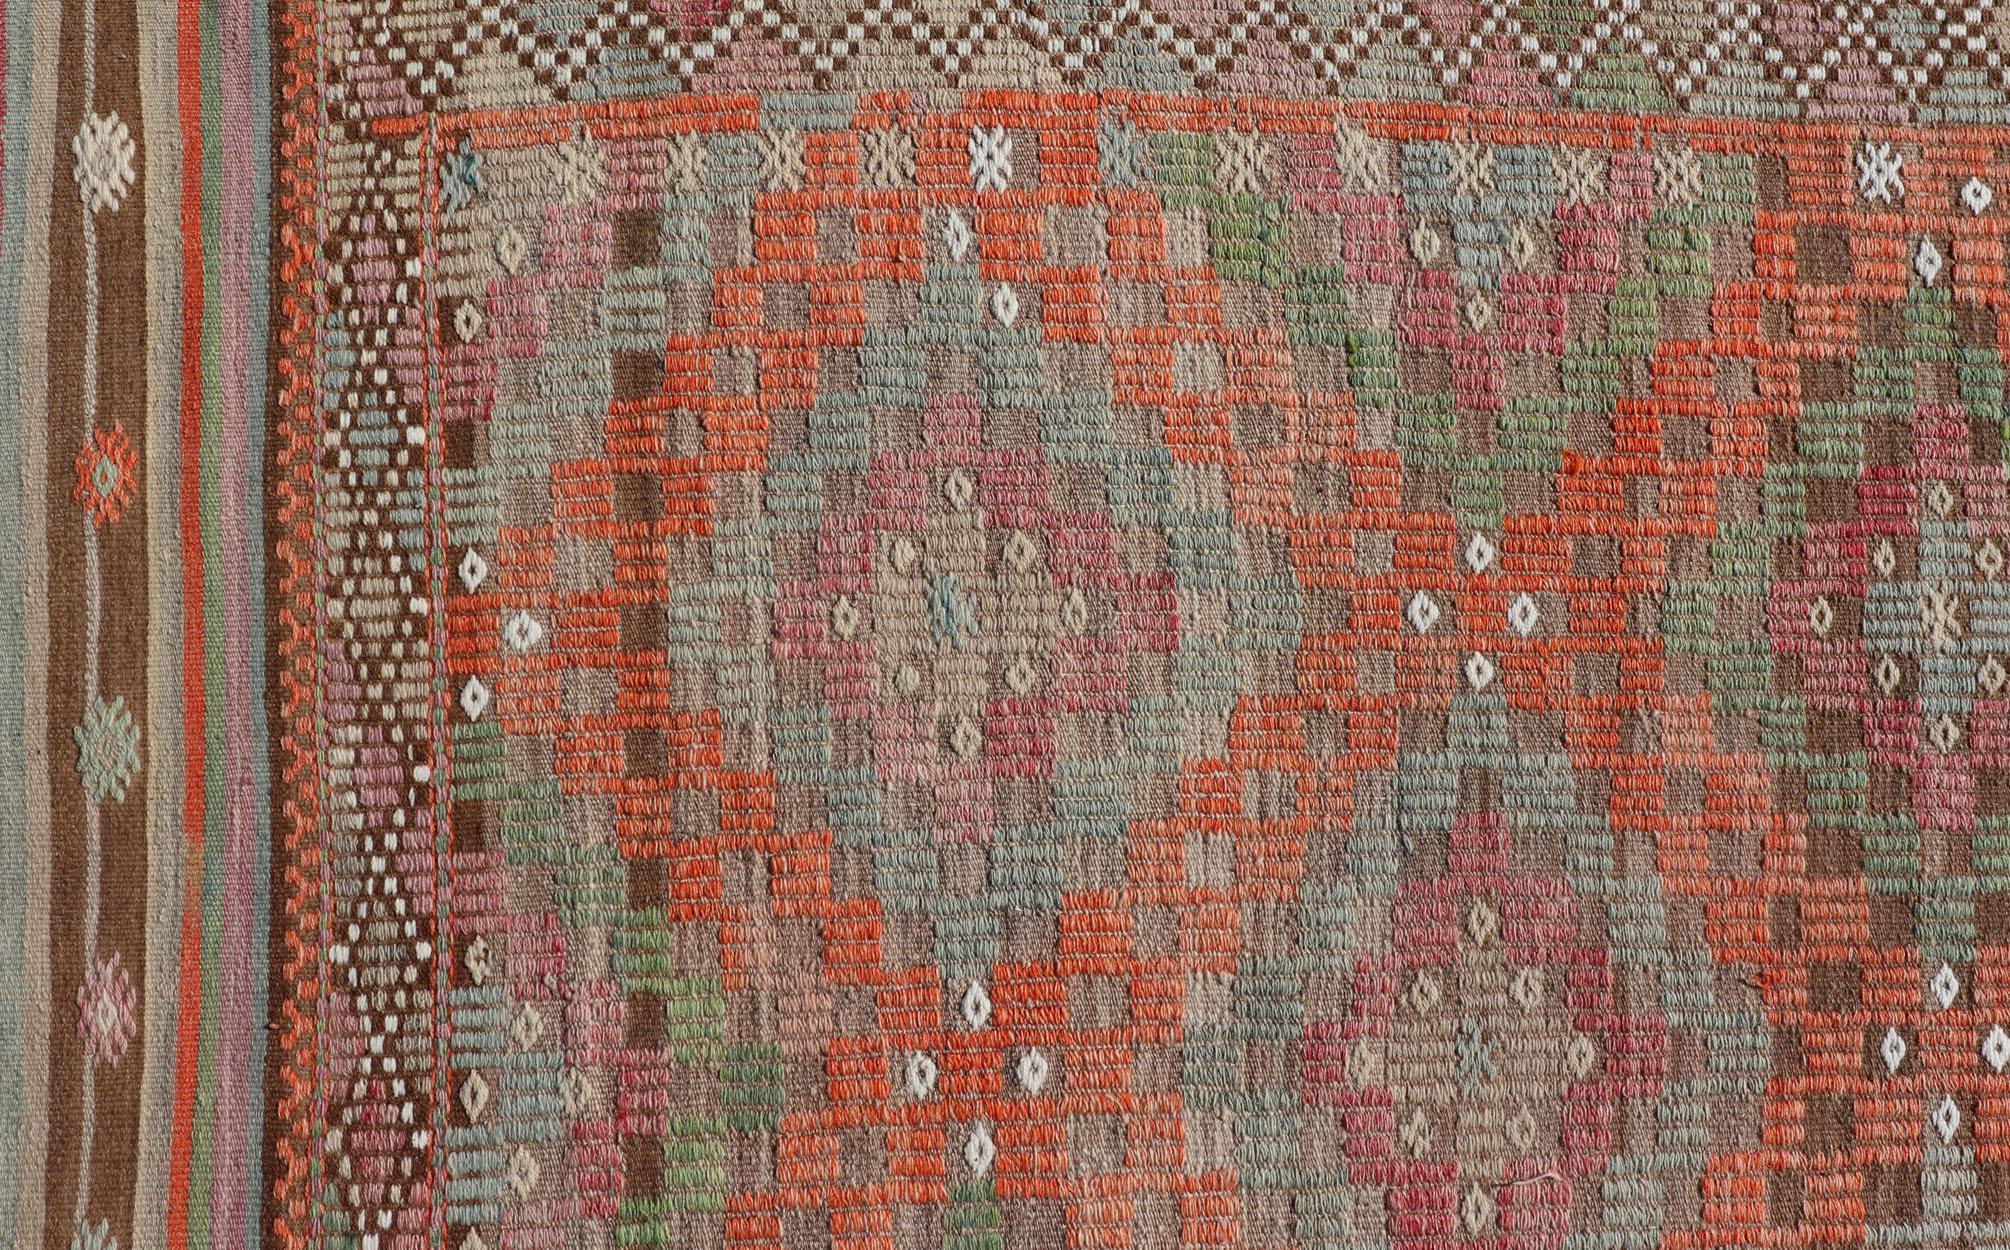 Vintage Turkish flat-weave Tribal Modern kilim with embroideries in multi colors, Keivan Woven Arts / rug / EN-178975 country of origin / type: Turkey / Kilim, circa 1950

Measures: 6'5 x 8'8.